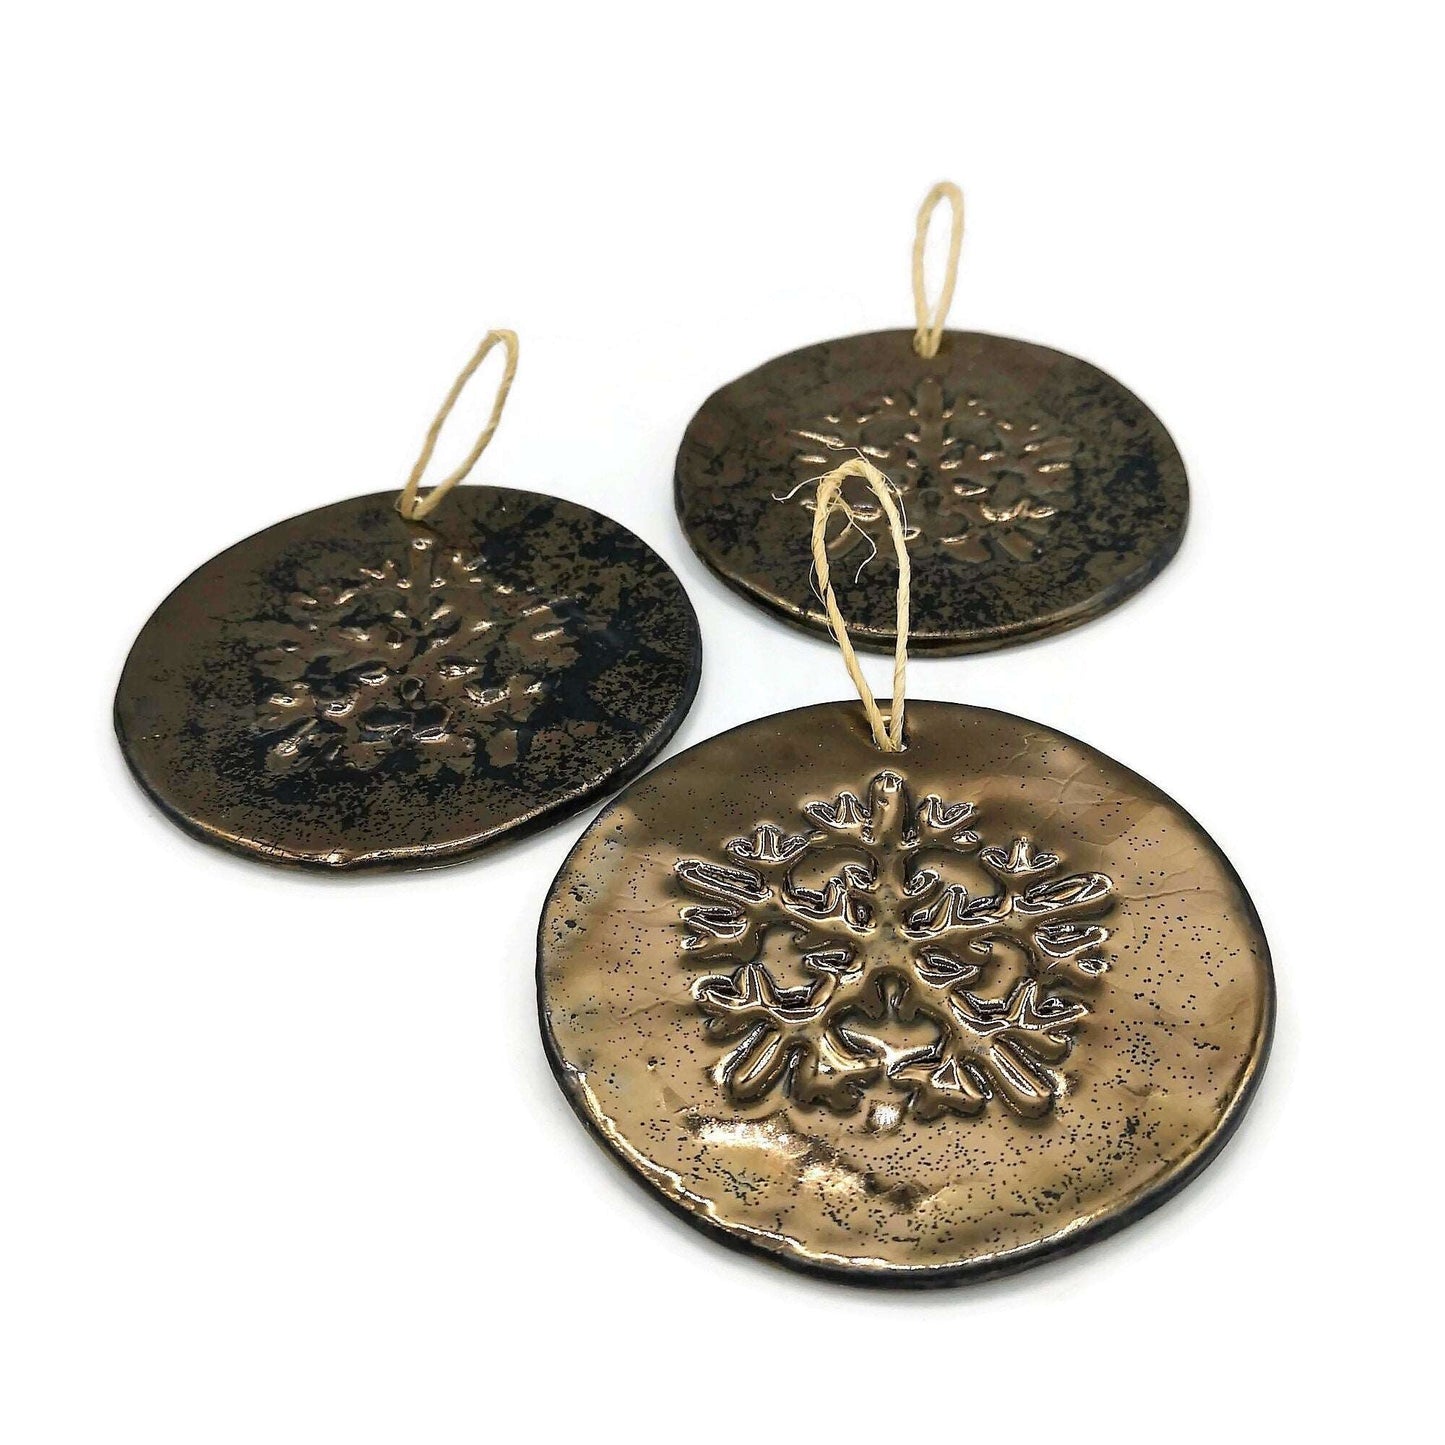 1Pc Golden Handmade Ceramic Snowflake Ornament, Metal Look Christmas Tree Decoration, Gift Idea